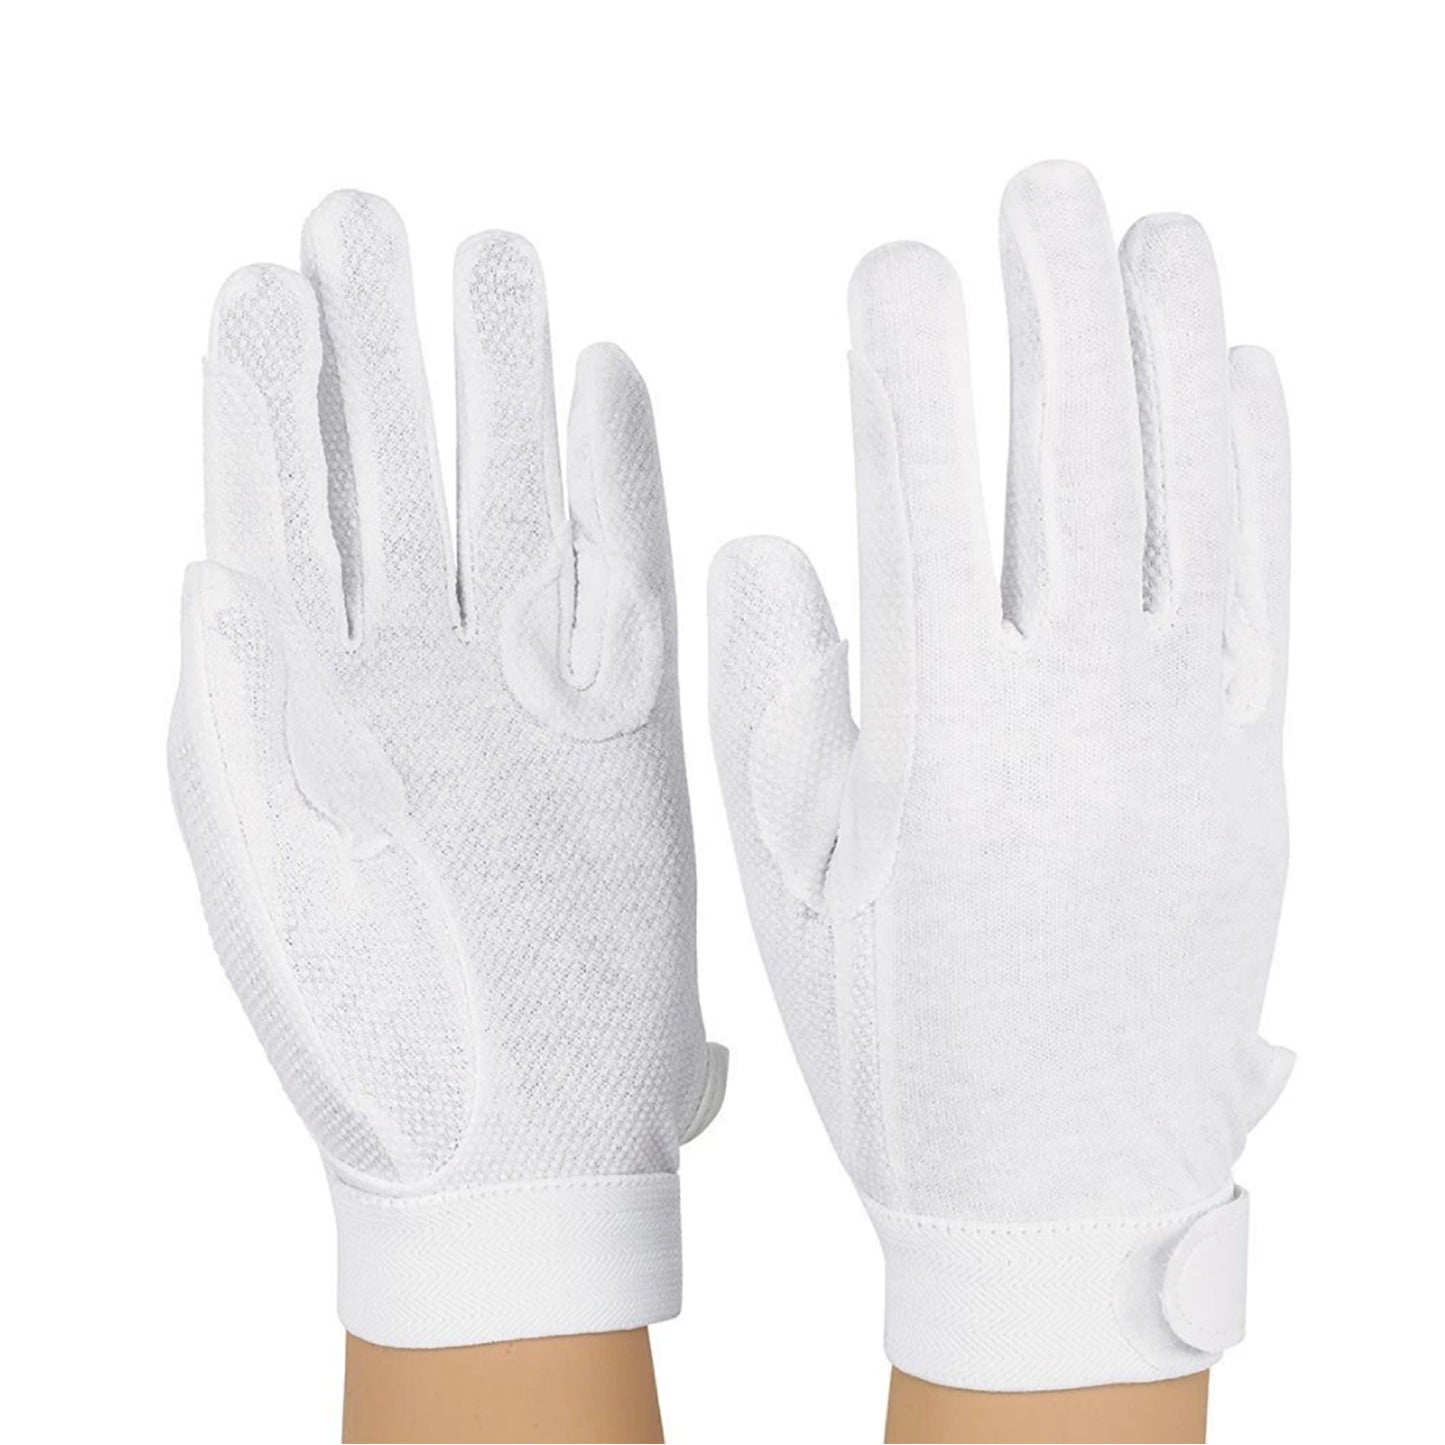 StylePlus Deluxe Sure Grip Gloves